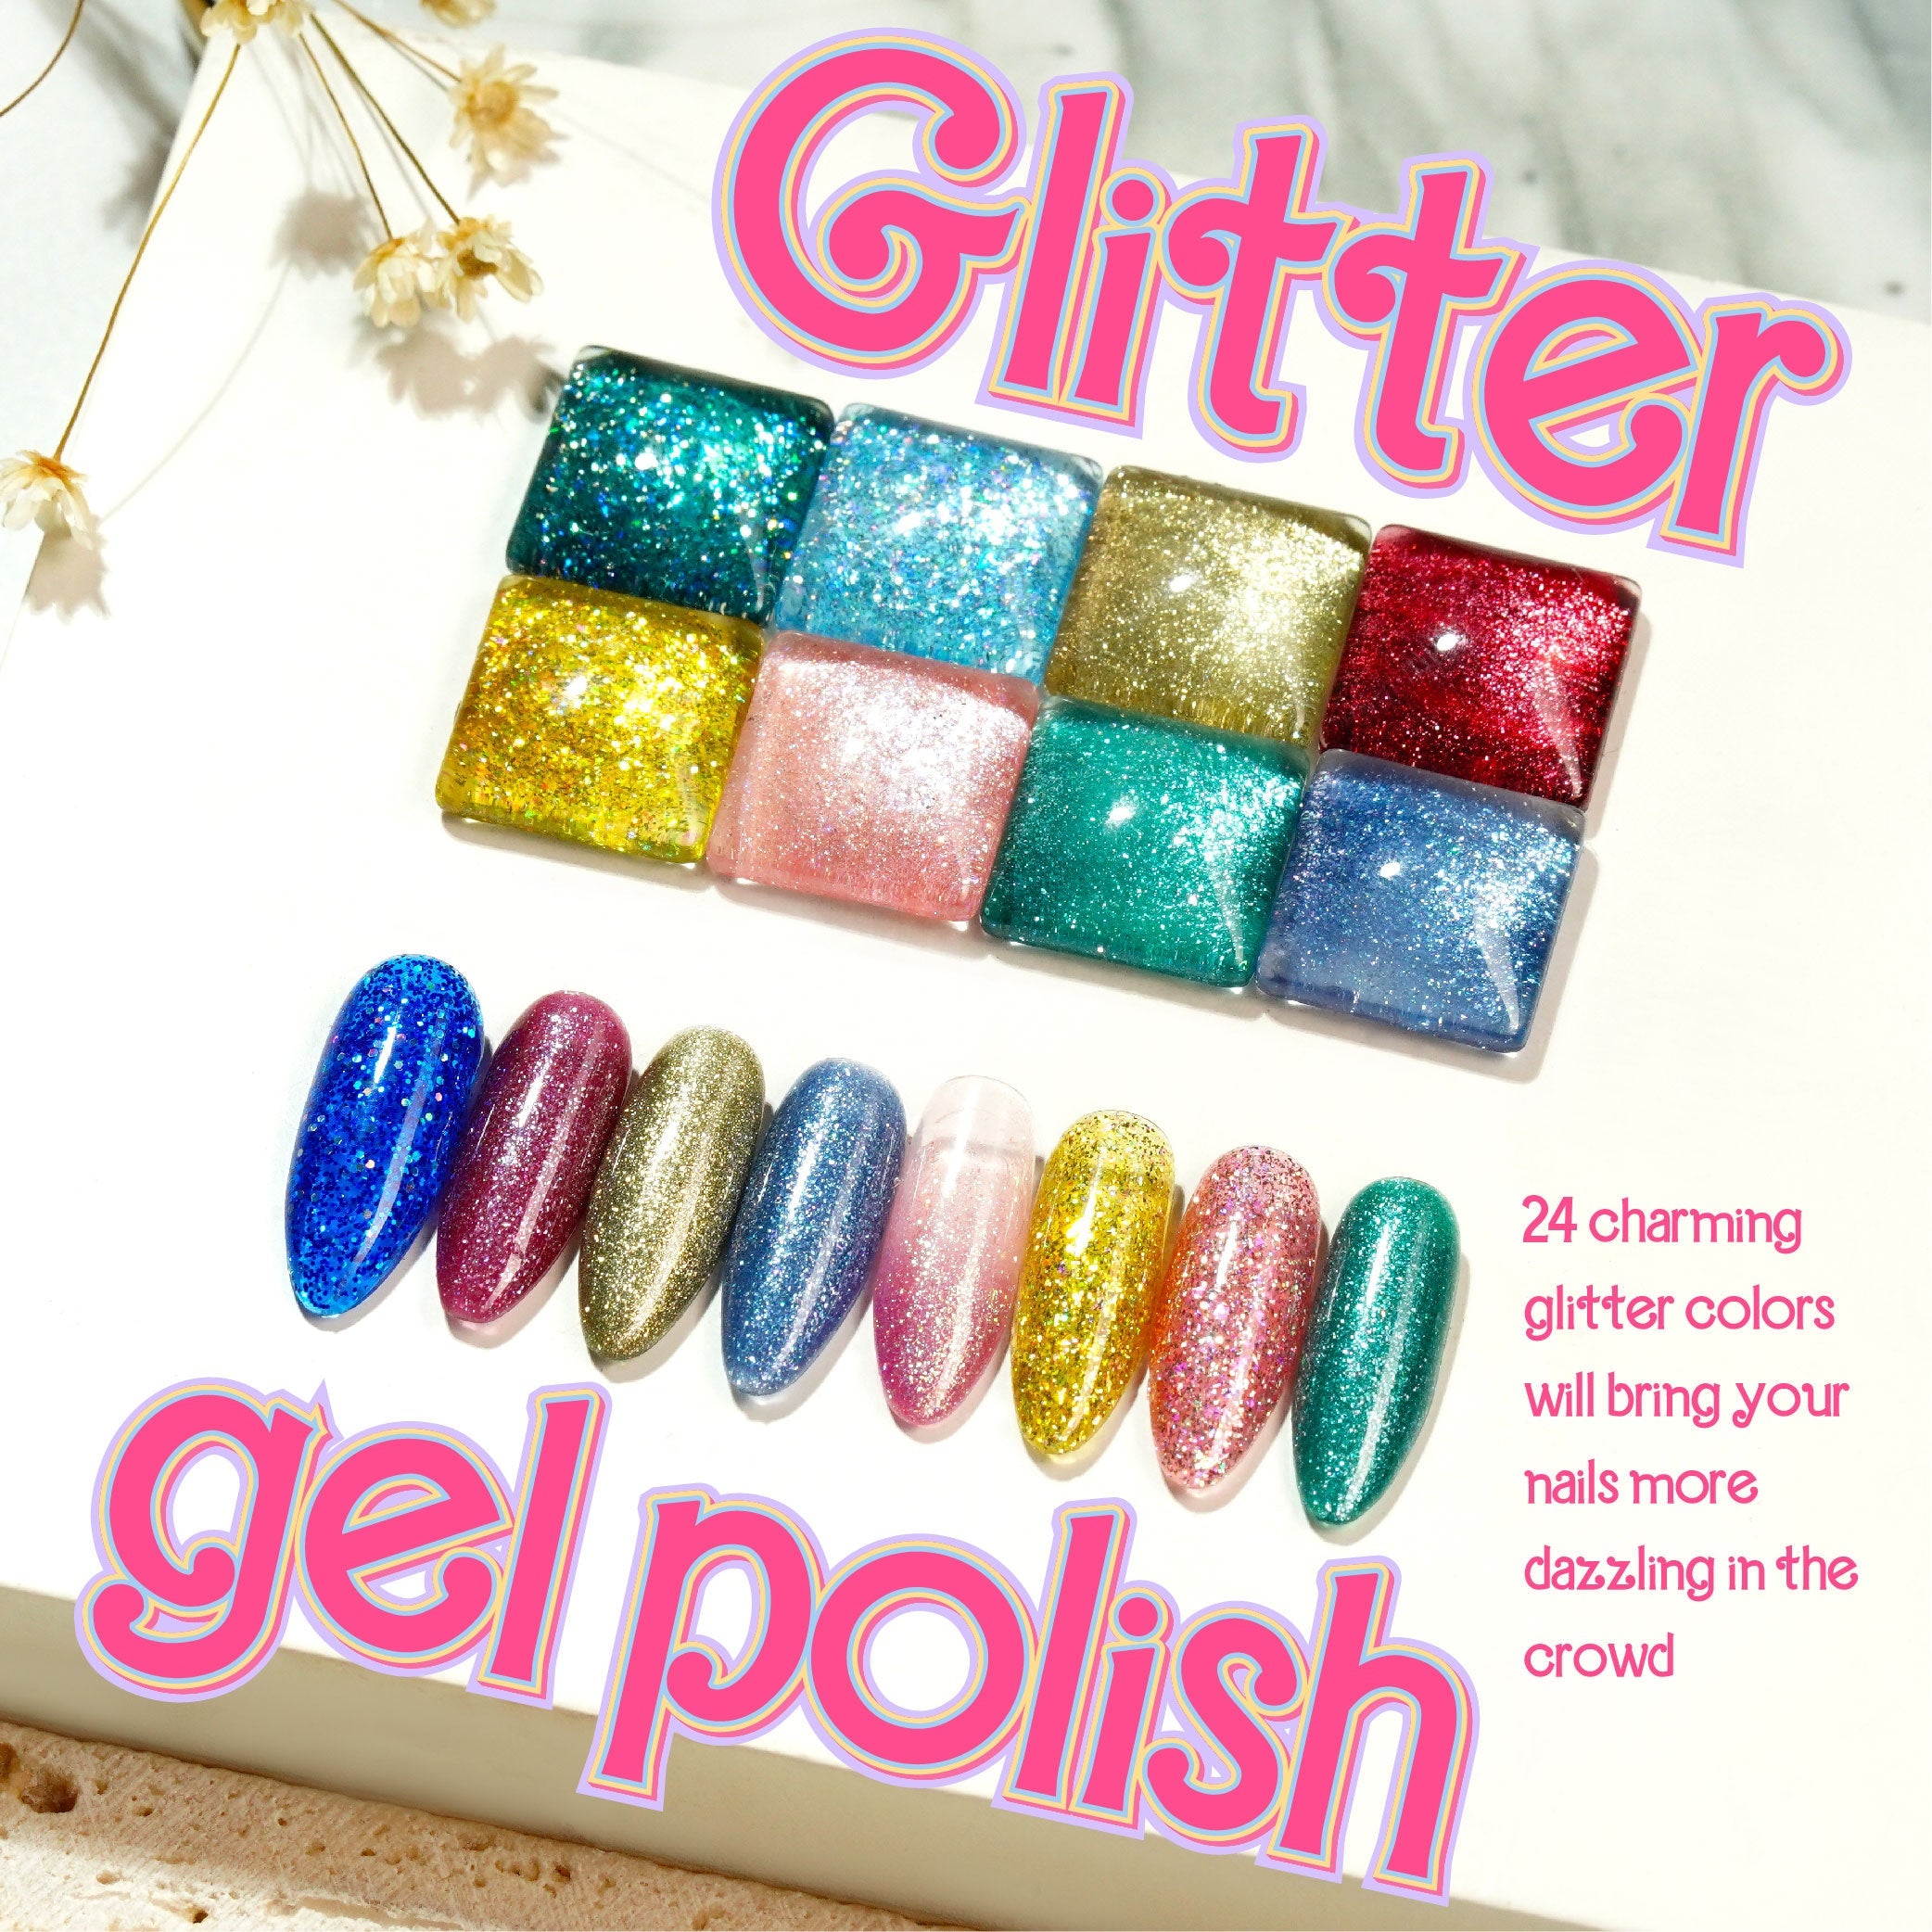 LAVIS Glitter G03 - 22 - Gel Polish 0.5 oz - Barbie Collection